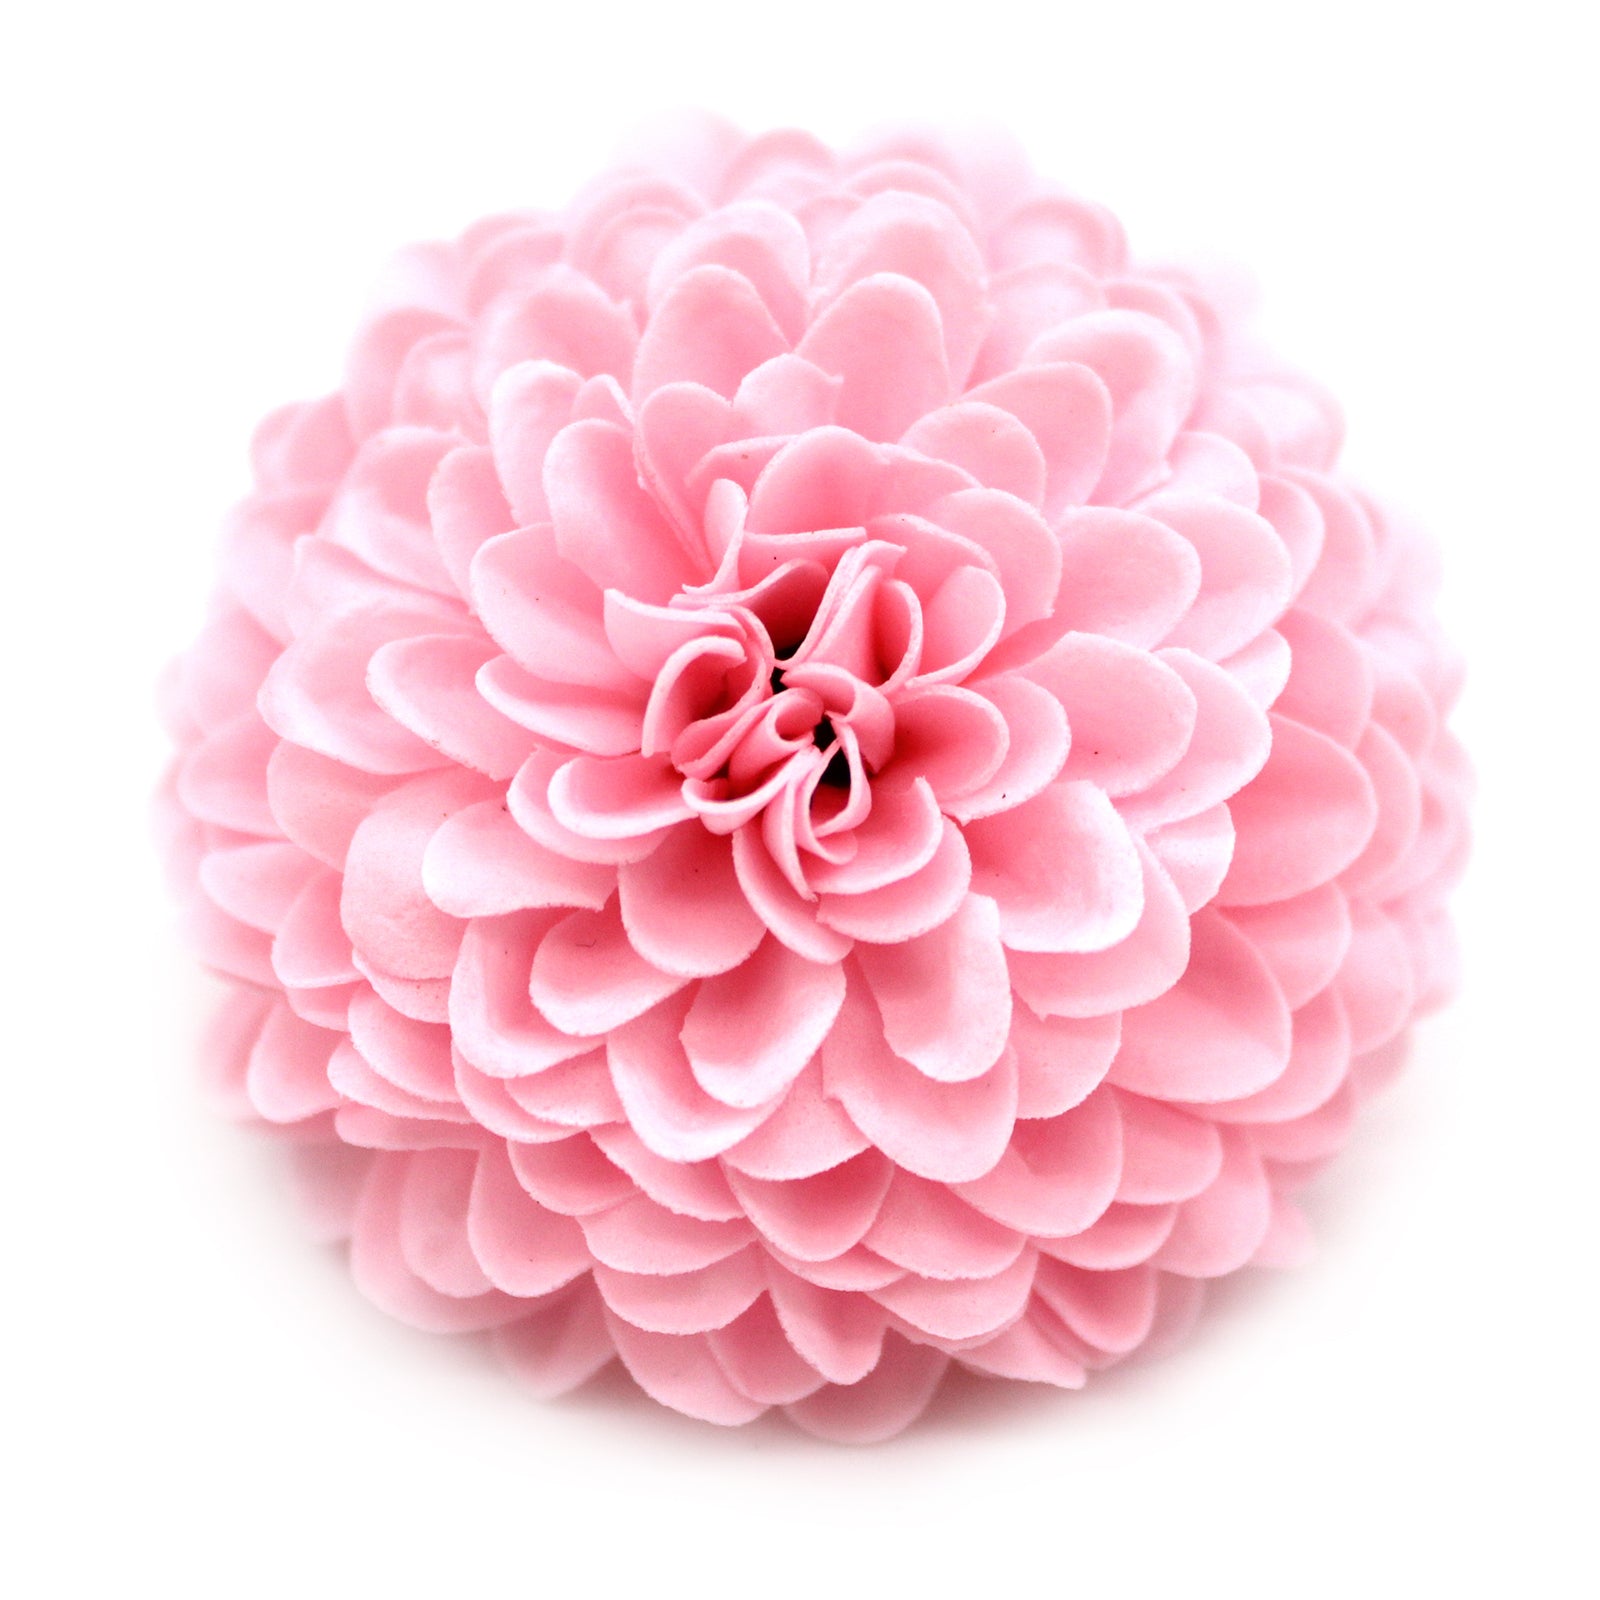 Craft Soap Flower - Small Chrysanthemum - Light Pink